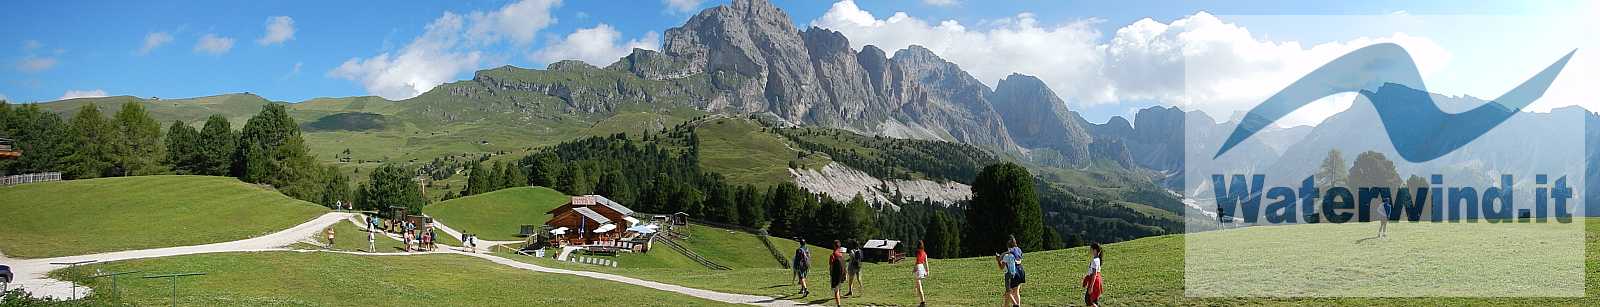 Trekking en el Alp Col Raiser (Val Gardena)